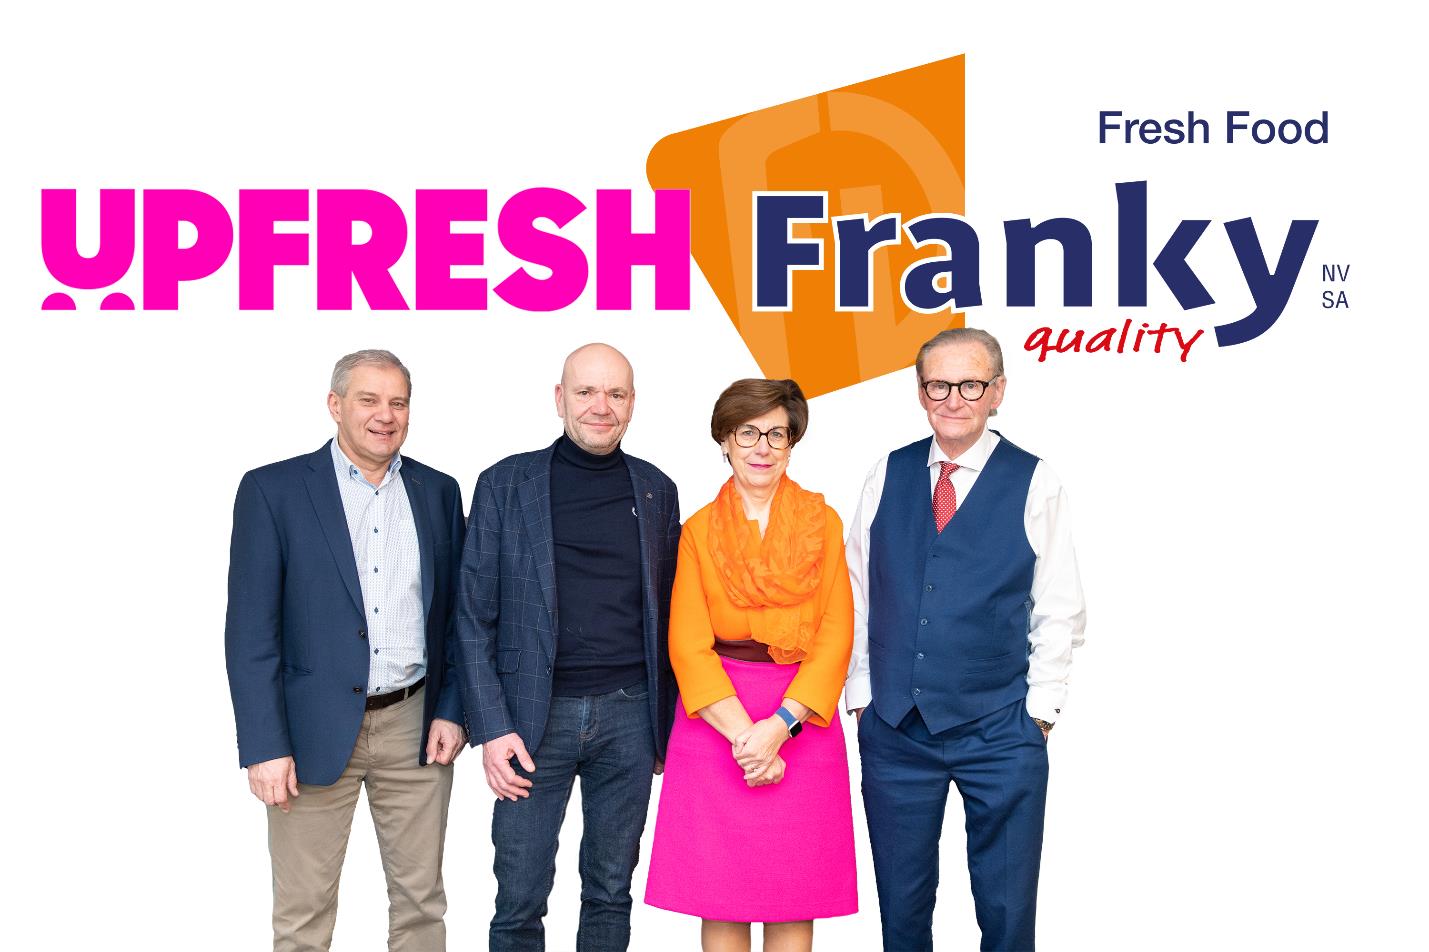 Franky Fresh Food en UpFresh bundelen krachten in één groep